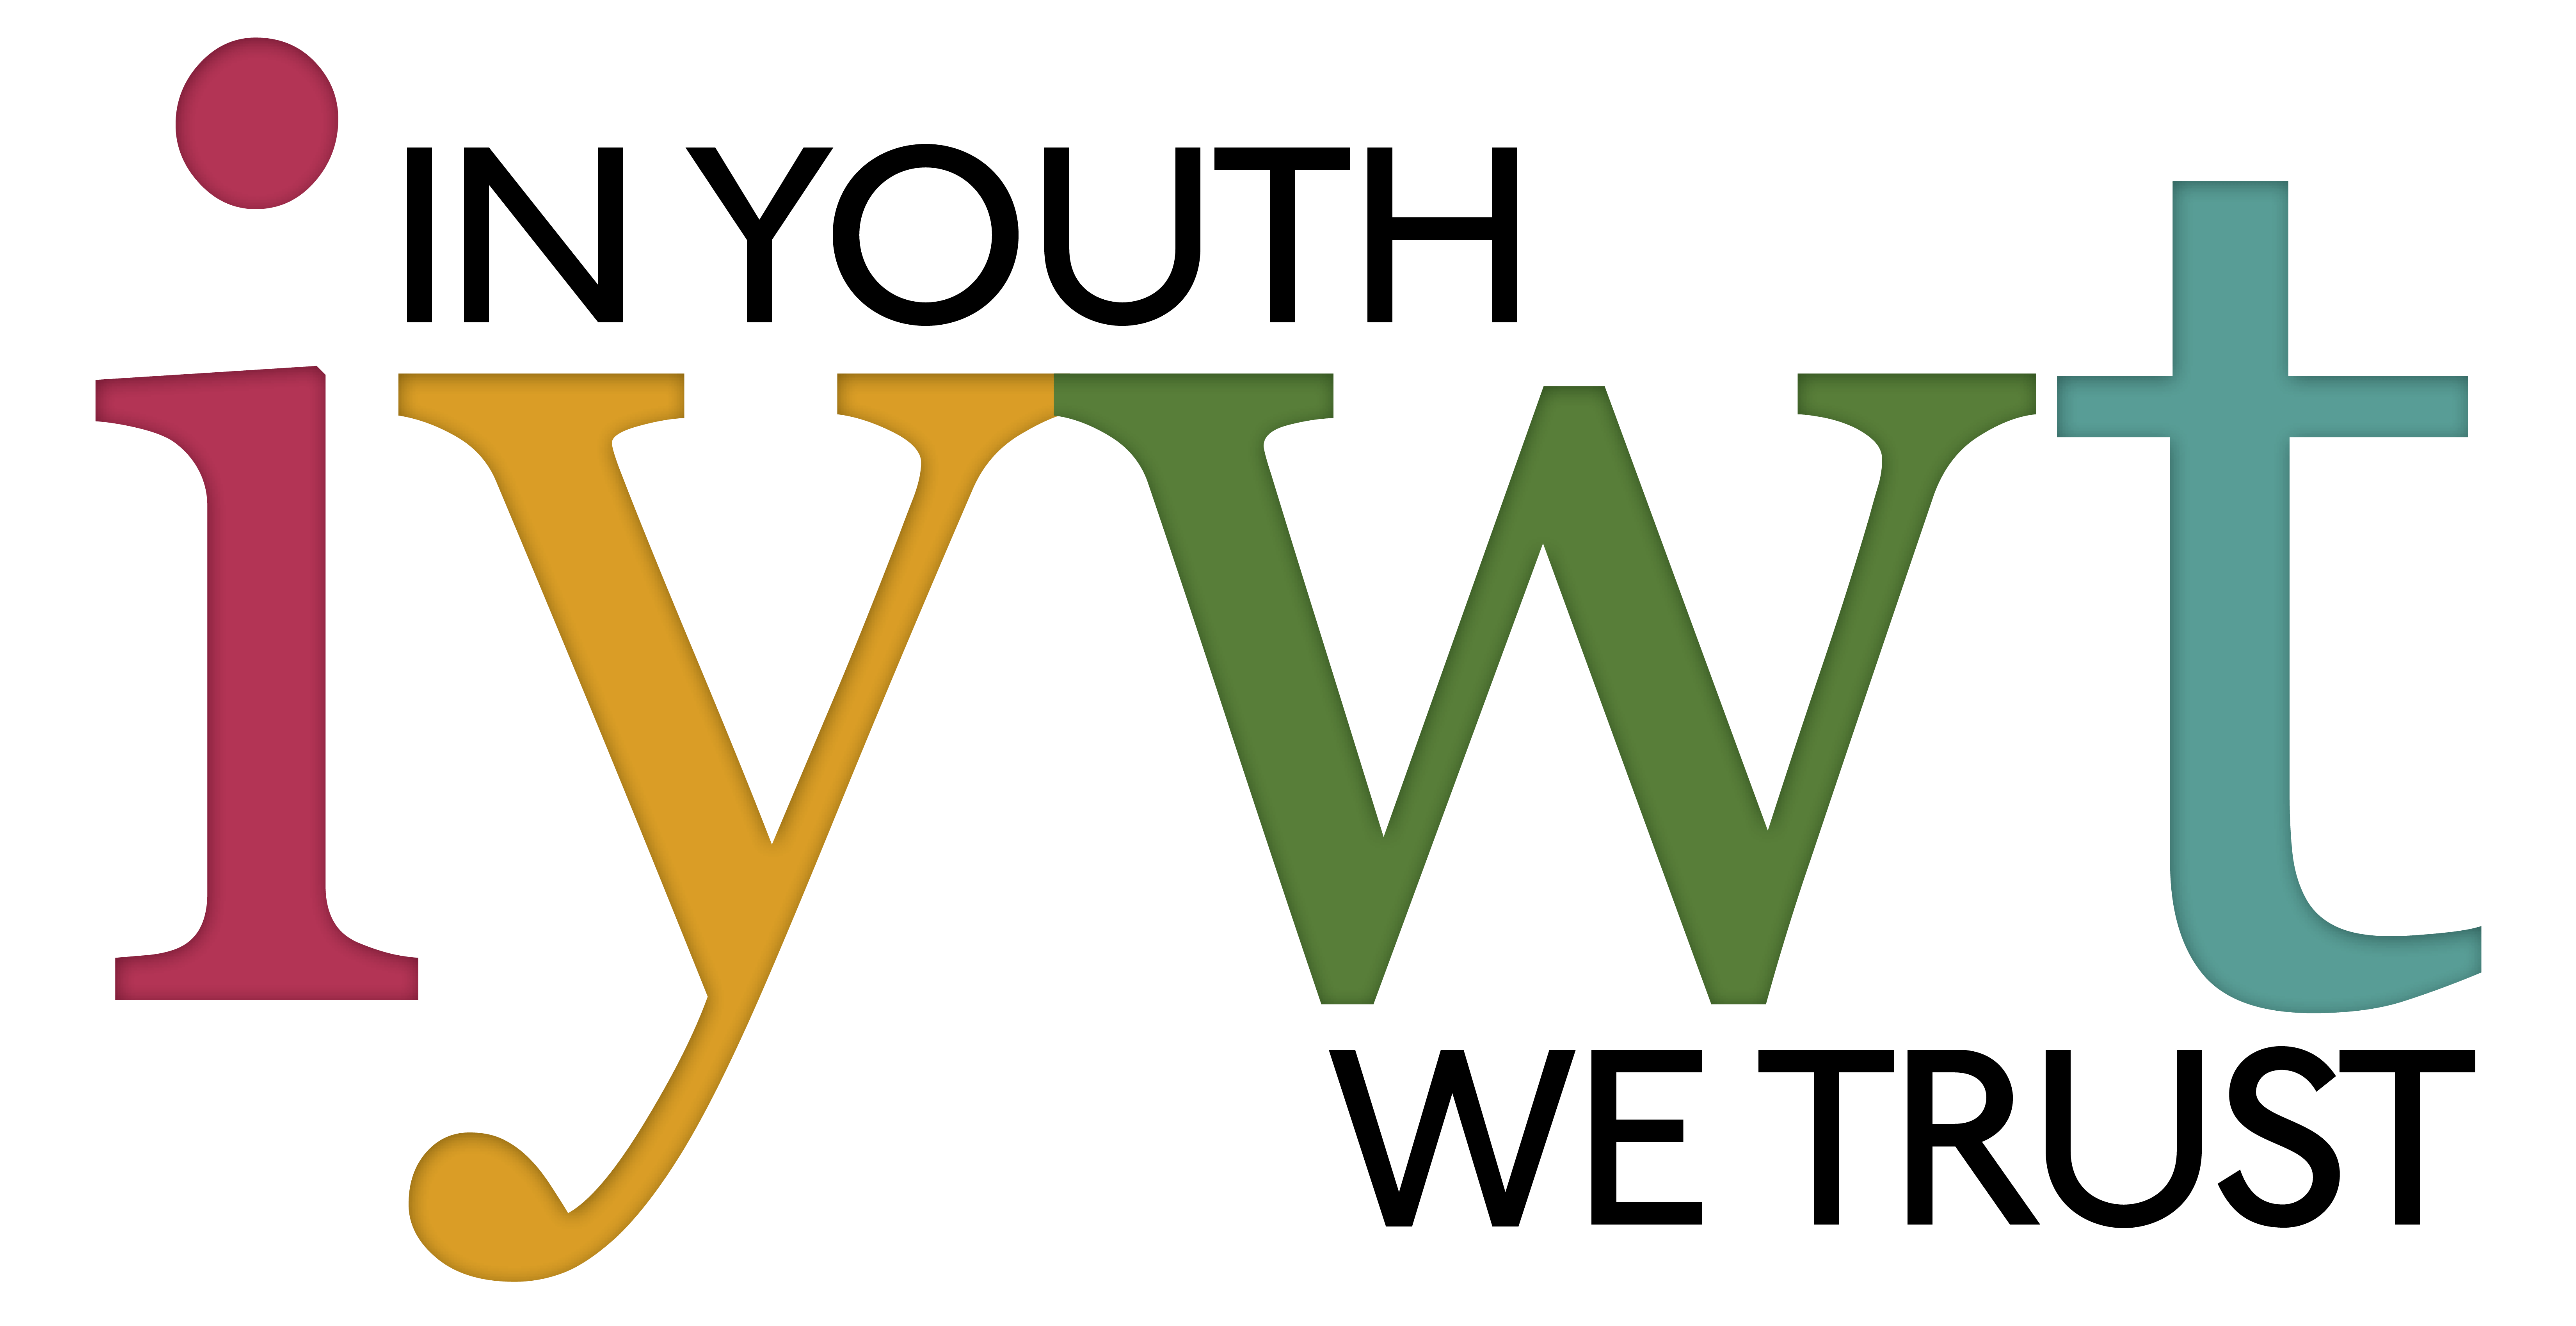 IYWT 25th Anniversary Logo